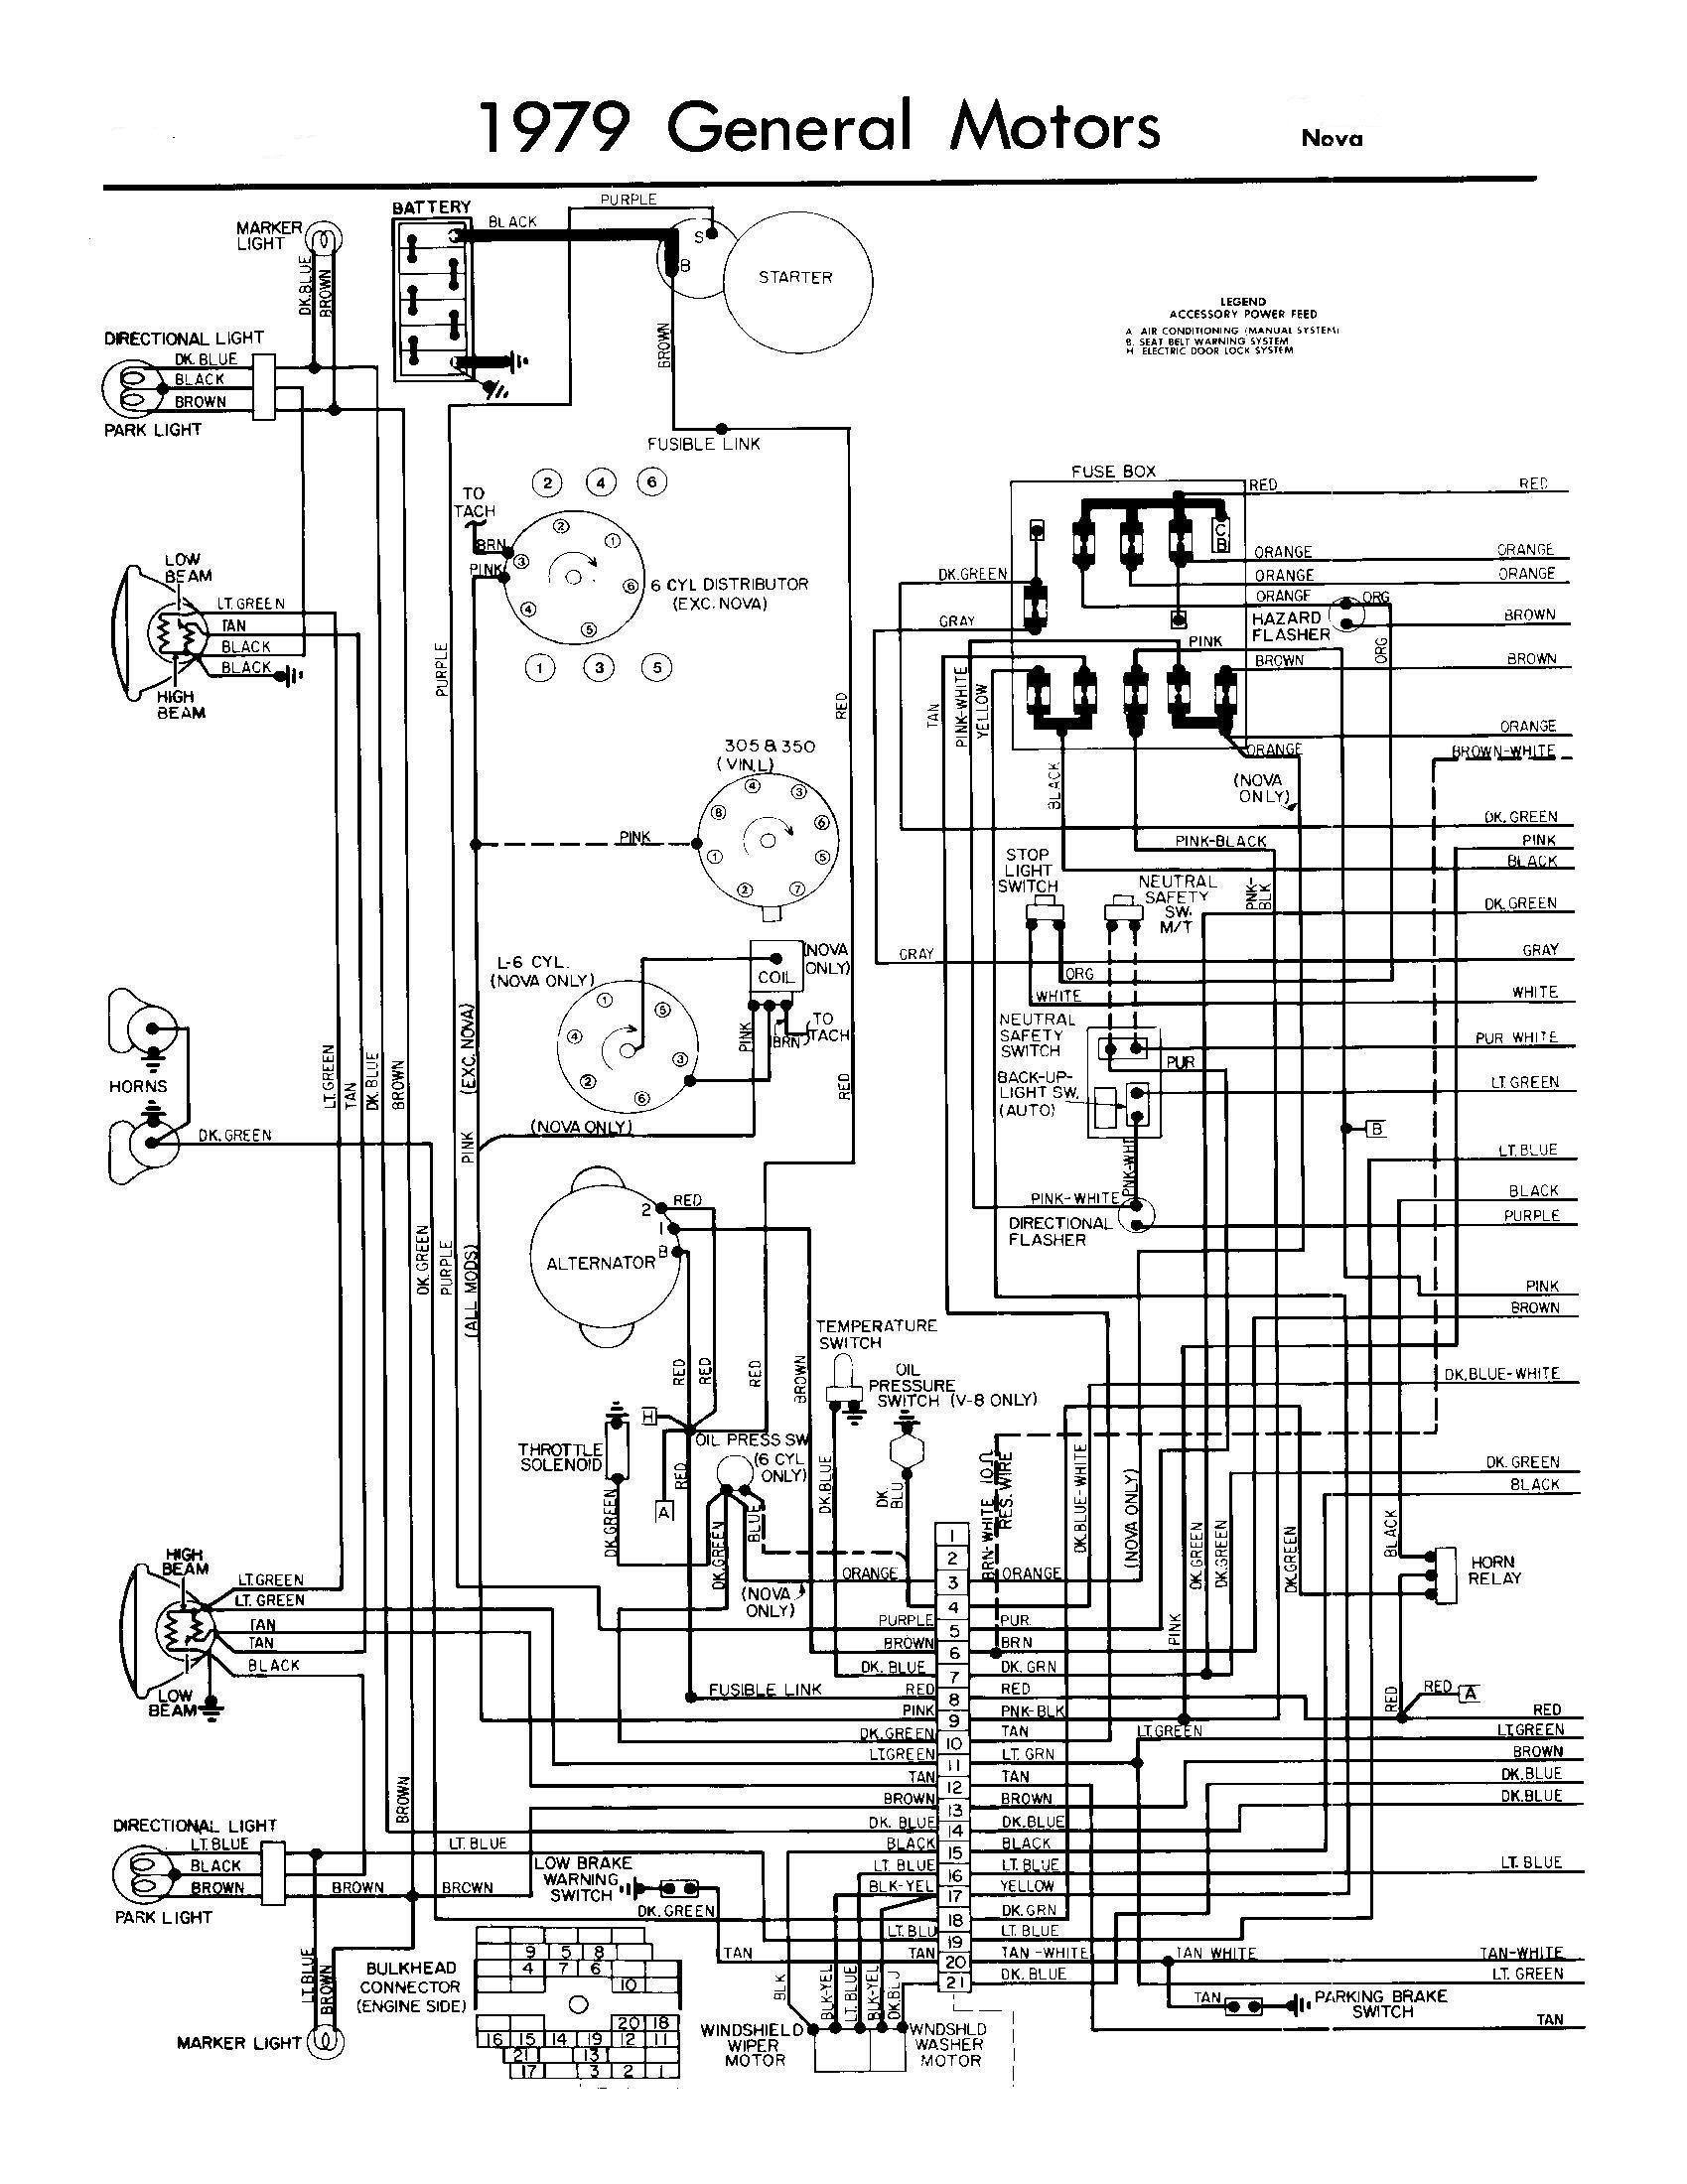 Cx500 E Sports Service Manual Wiring Diagram | Wiring Diagram - International Truck Wiring Diagram Manual